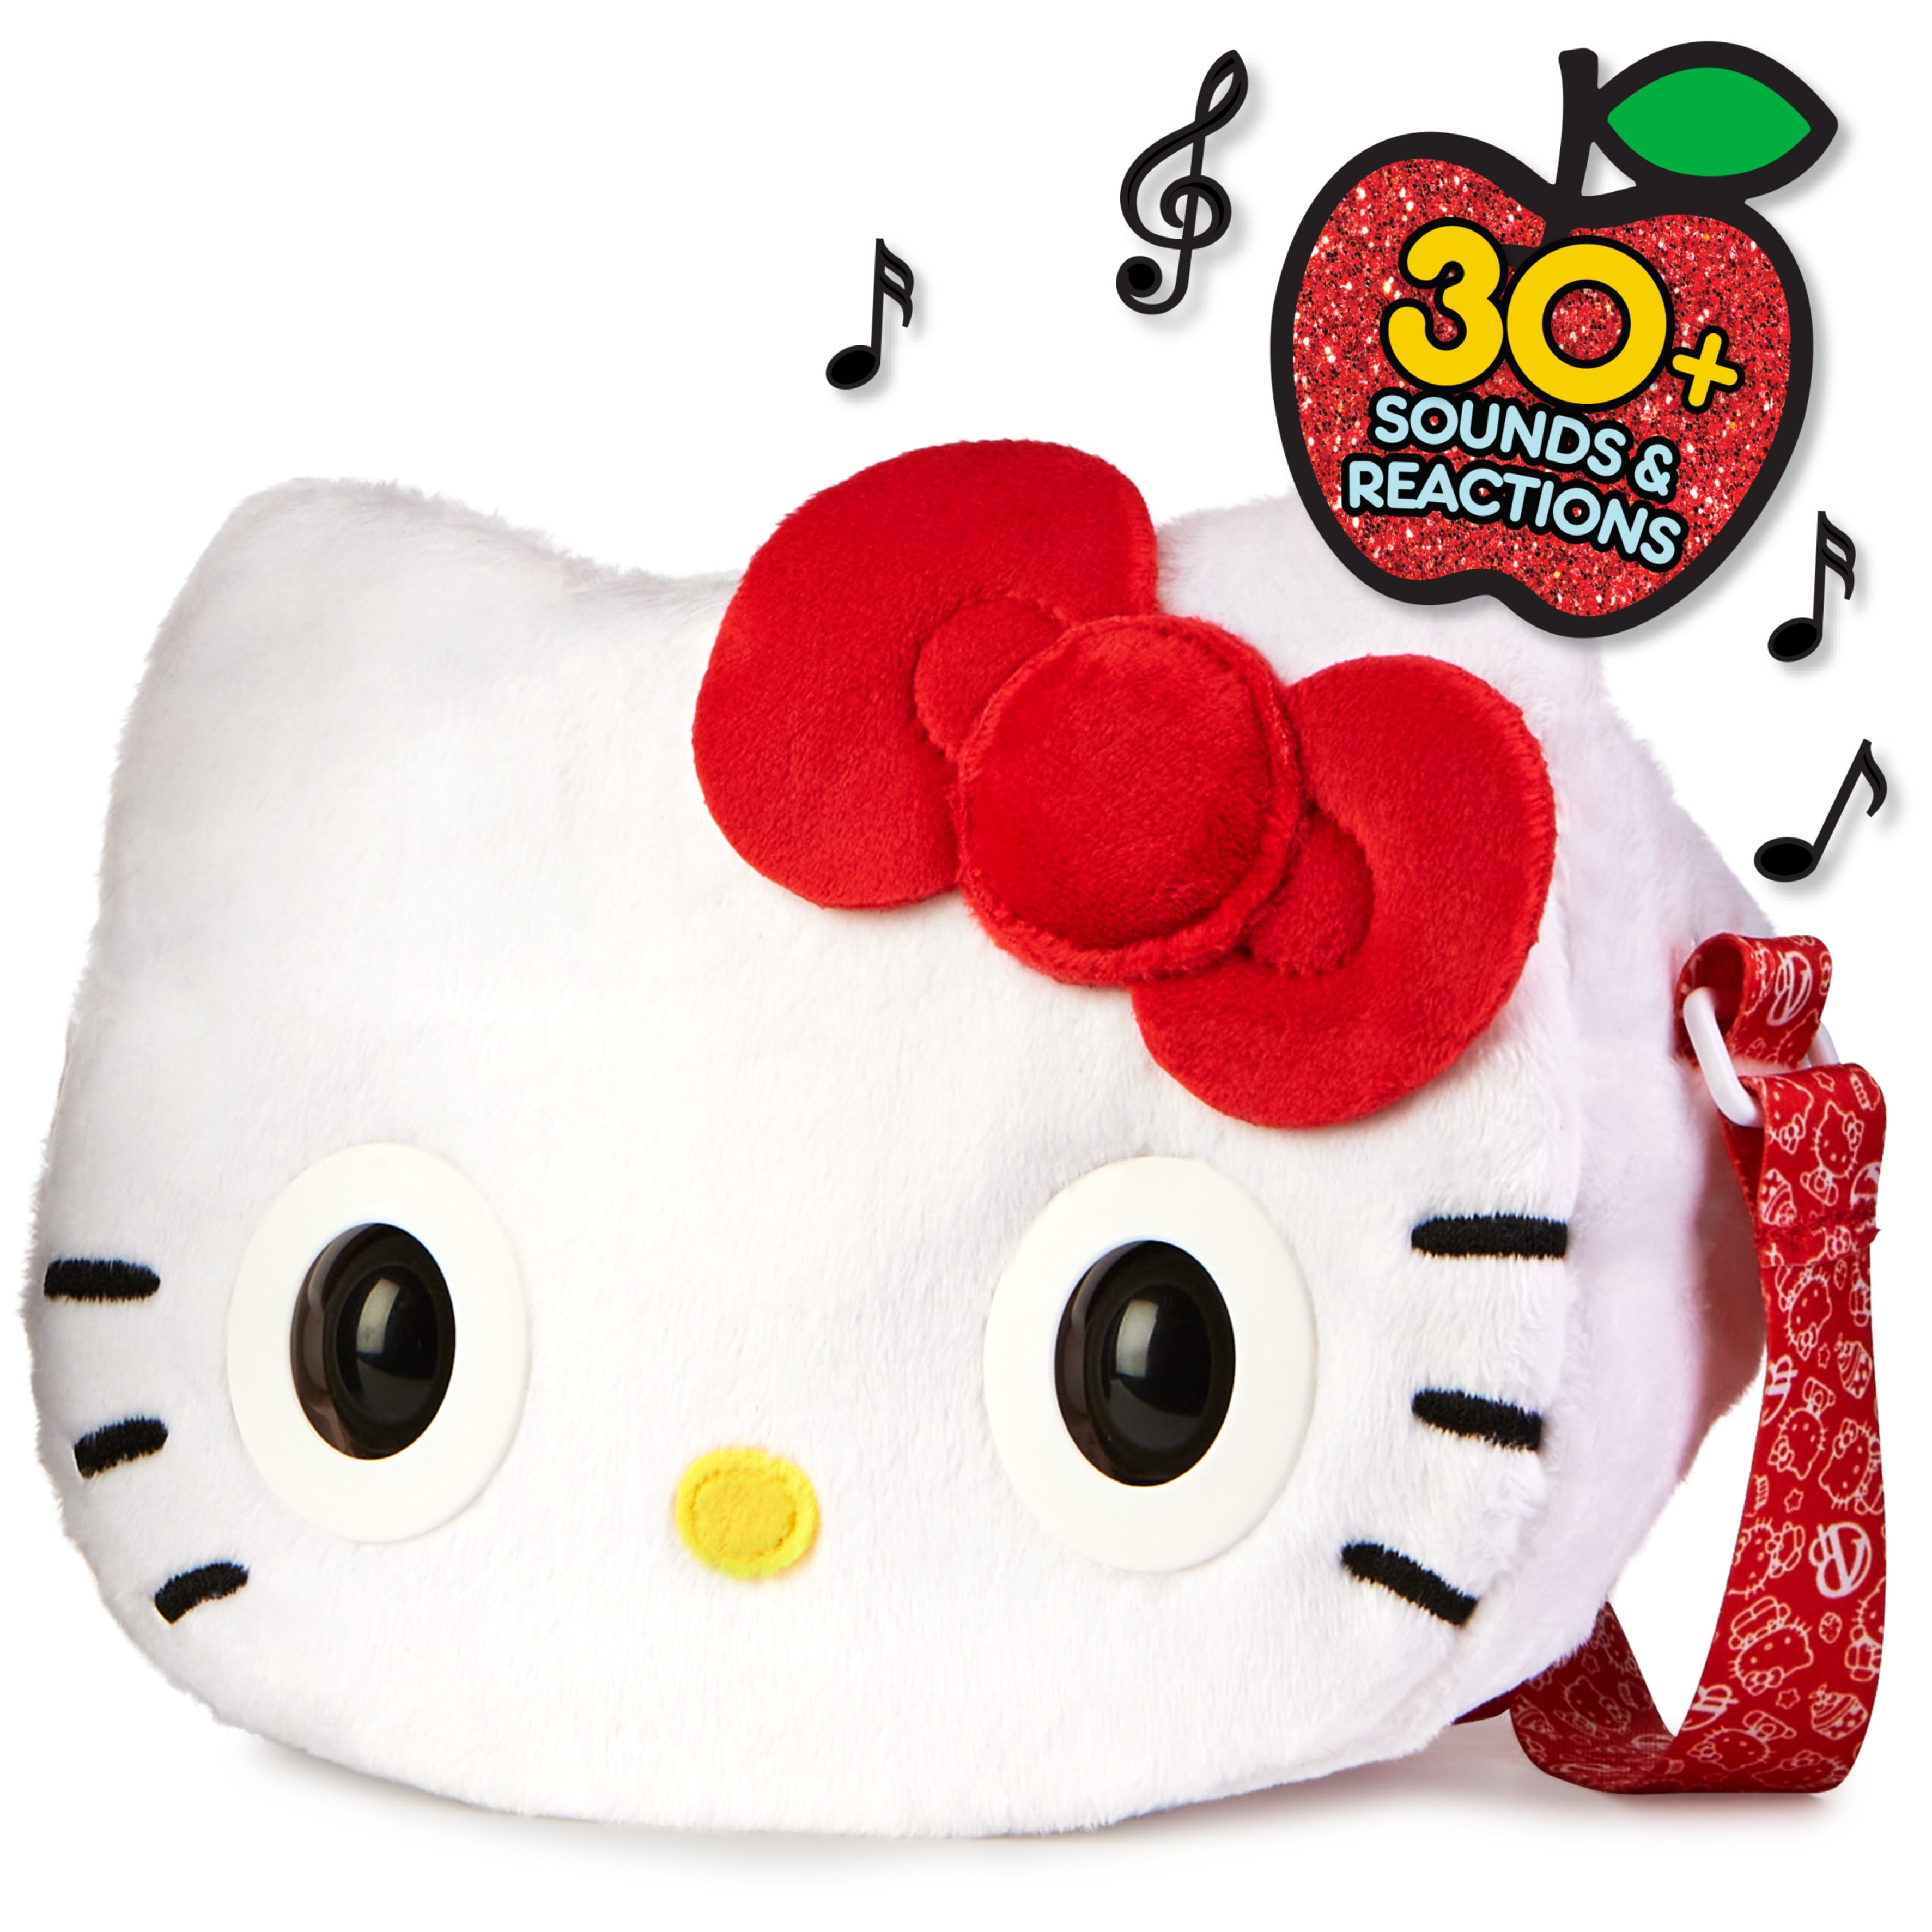 GUND Hello Kitty Dressed in Her Favorite Kawaii Costumes, Blind Box Plush  Series 